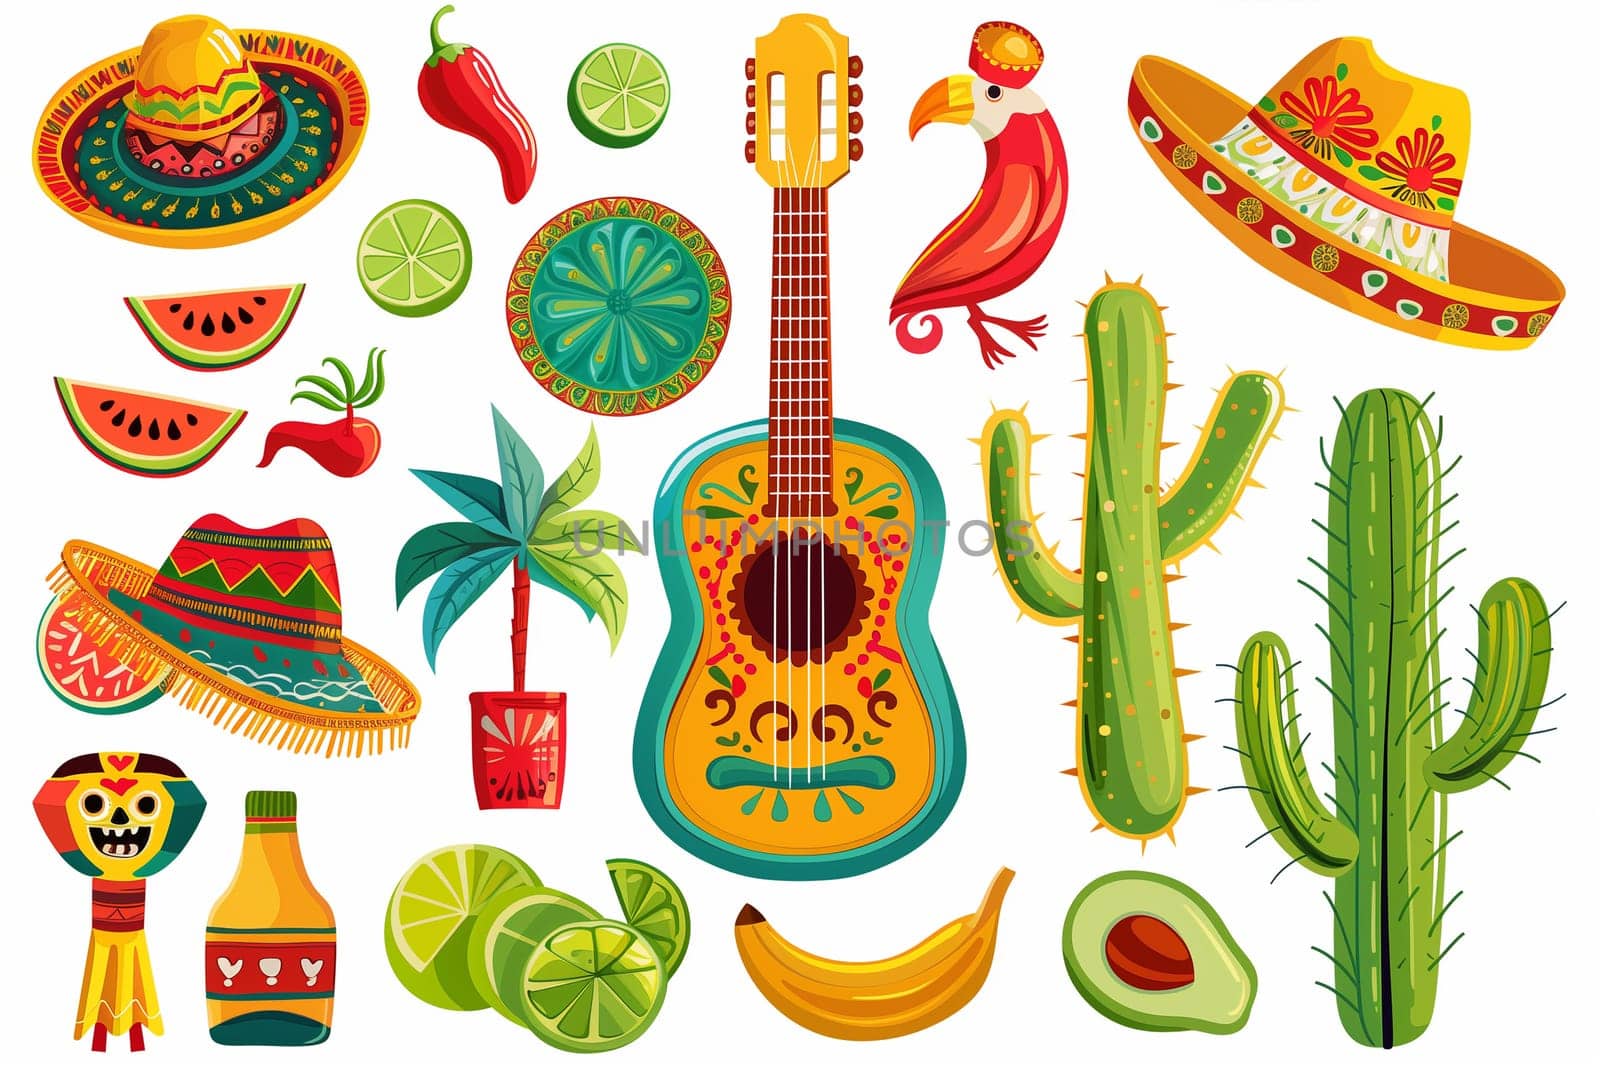 A colorful assortment of Mexican cultural symbols, including skulls, cacti, and musical instruments, representing Cinco de Mayo festivities.